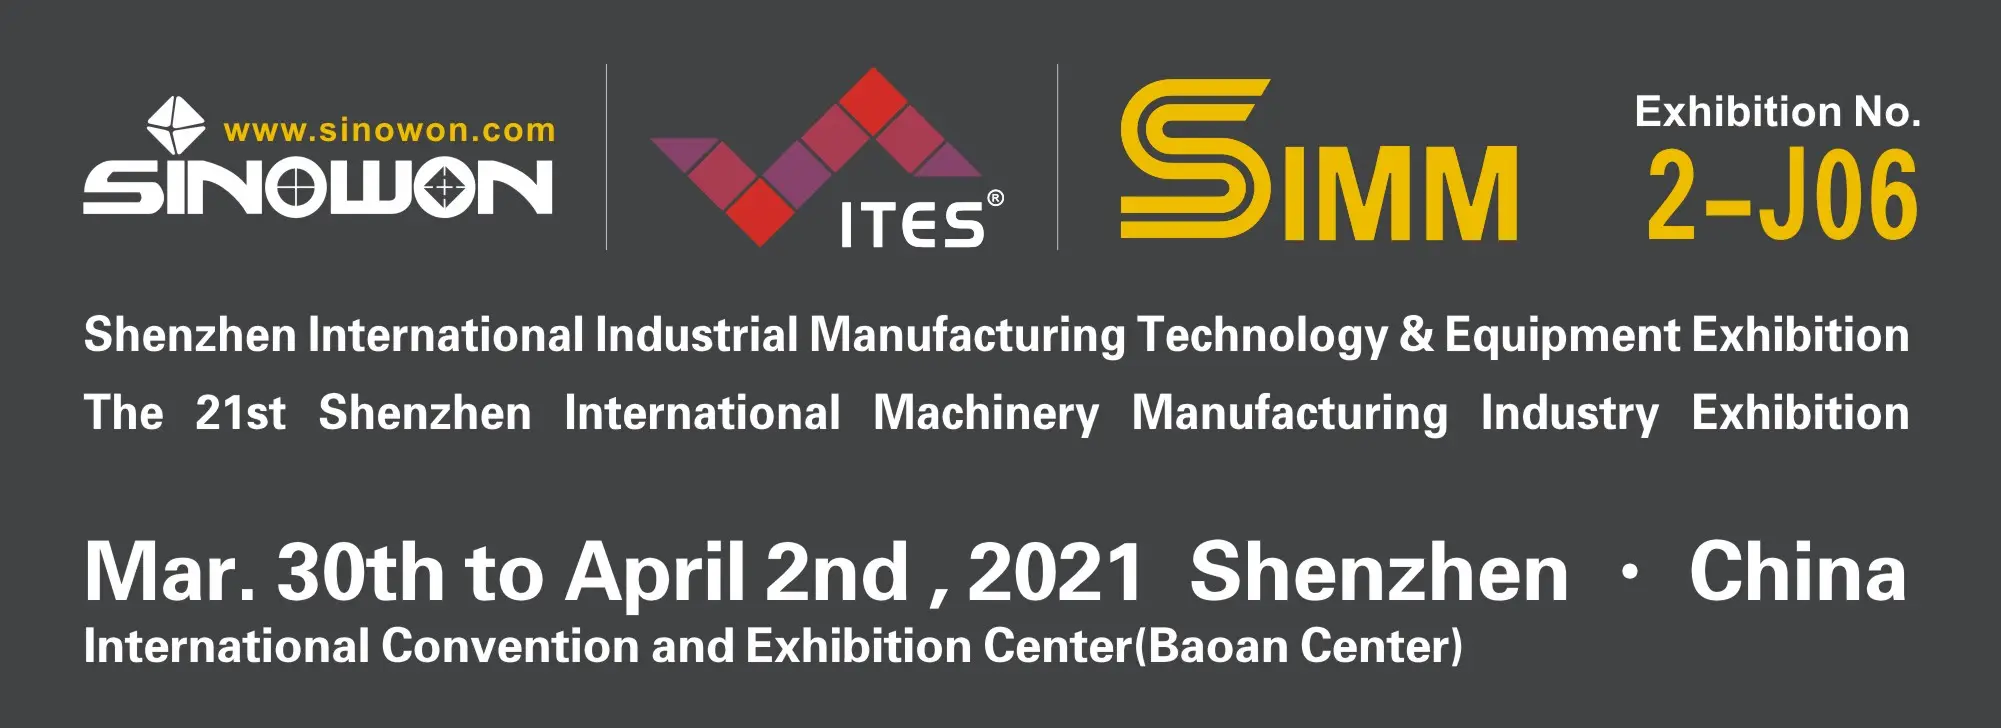 International Industrial Manufacturing Technology &Equipment Exhibition